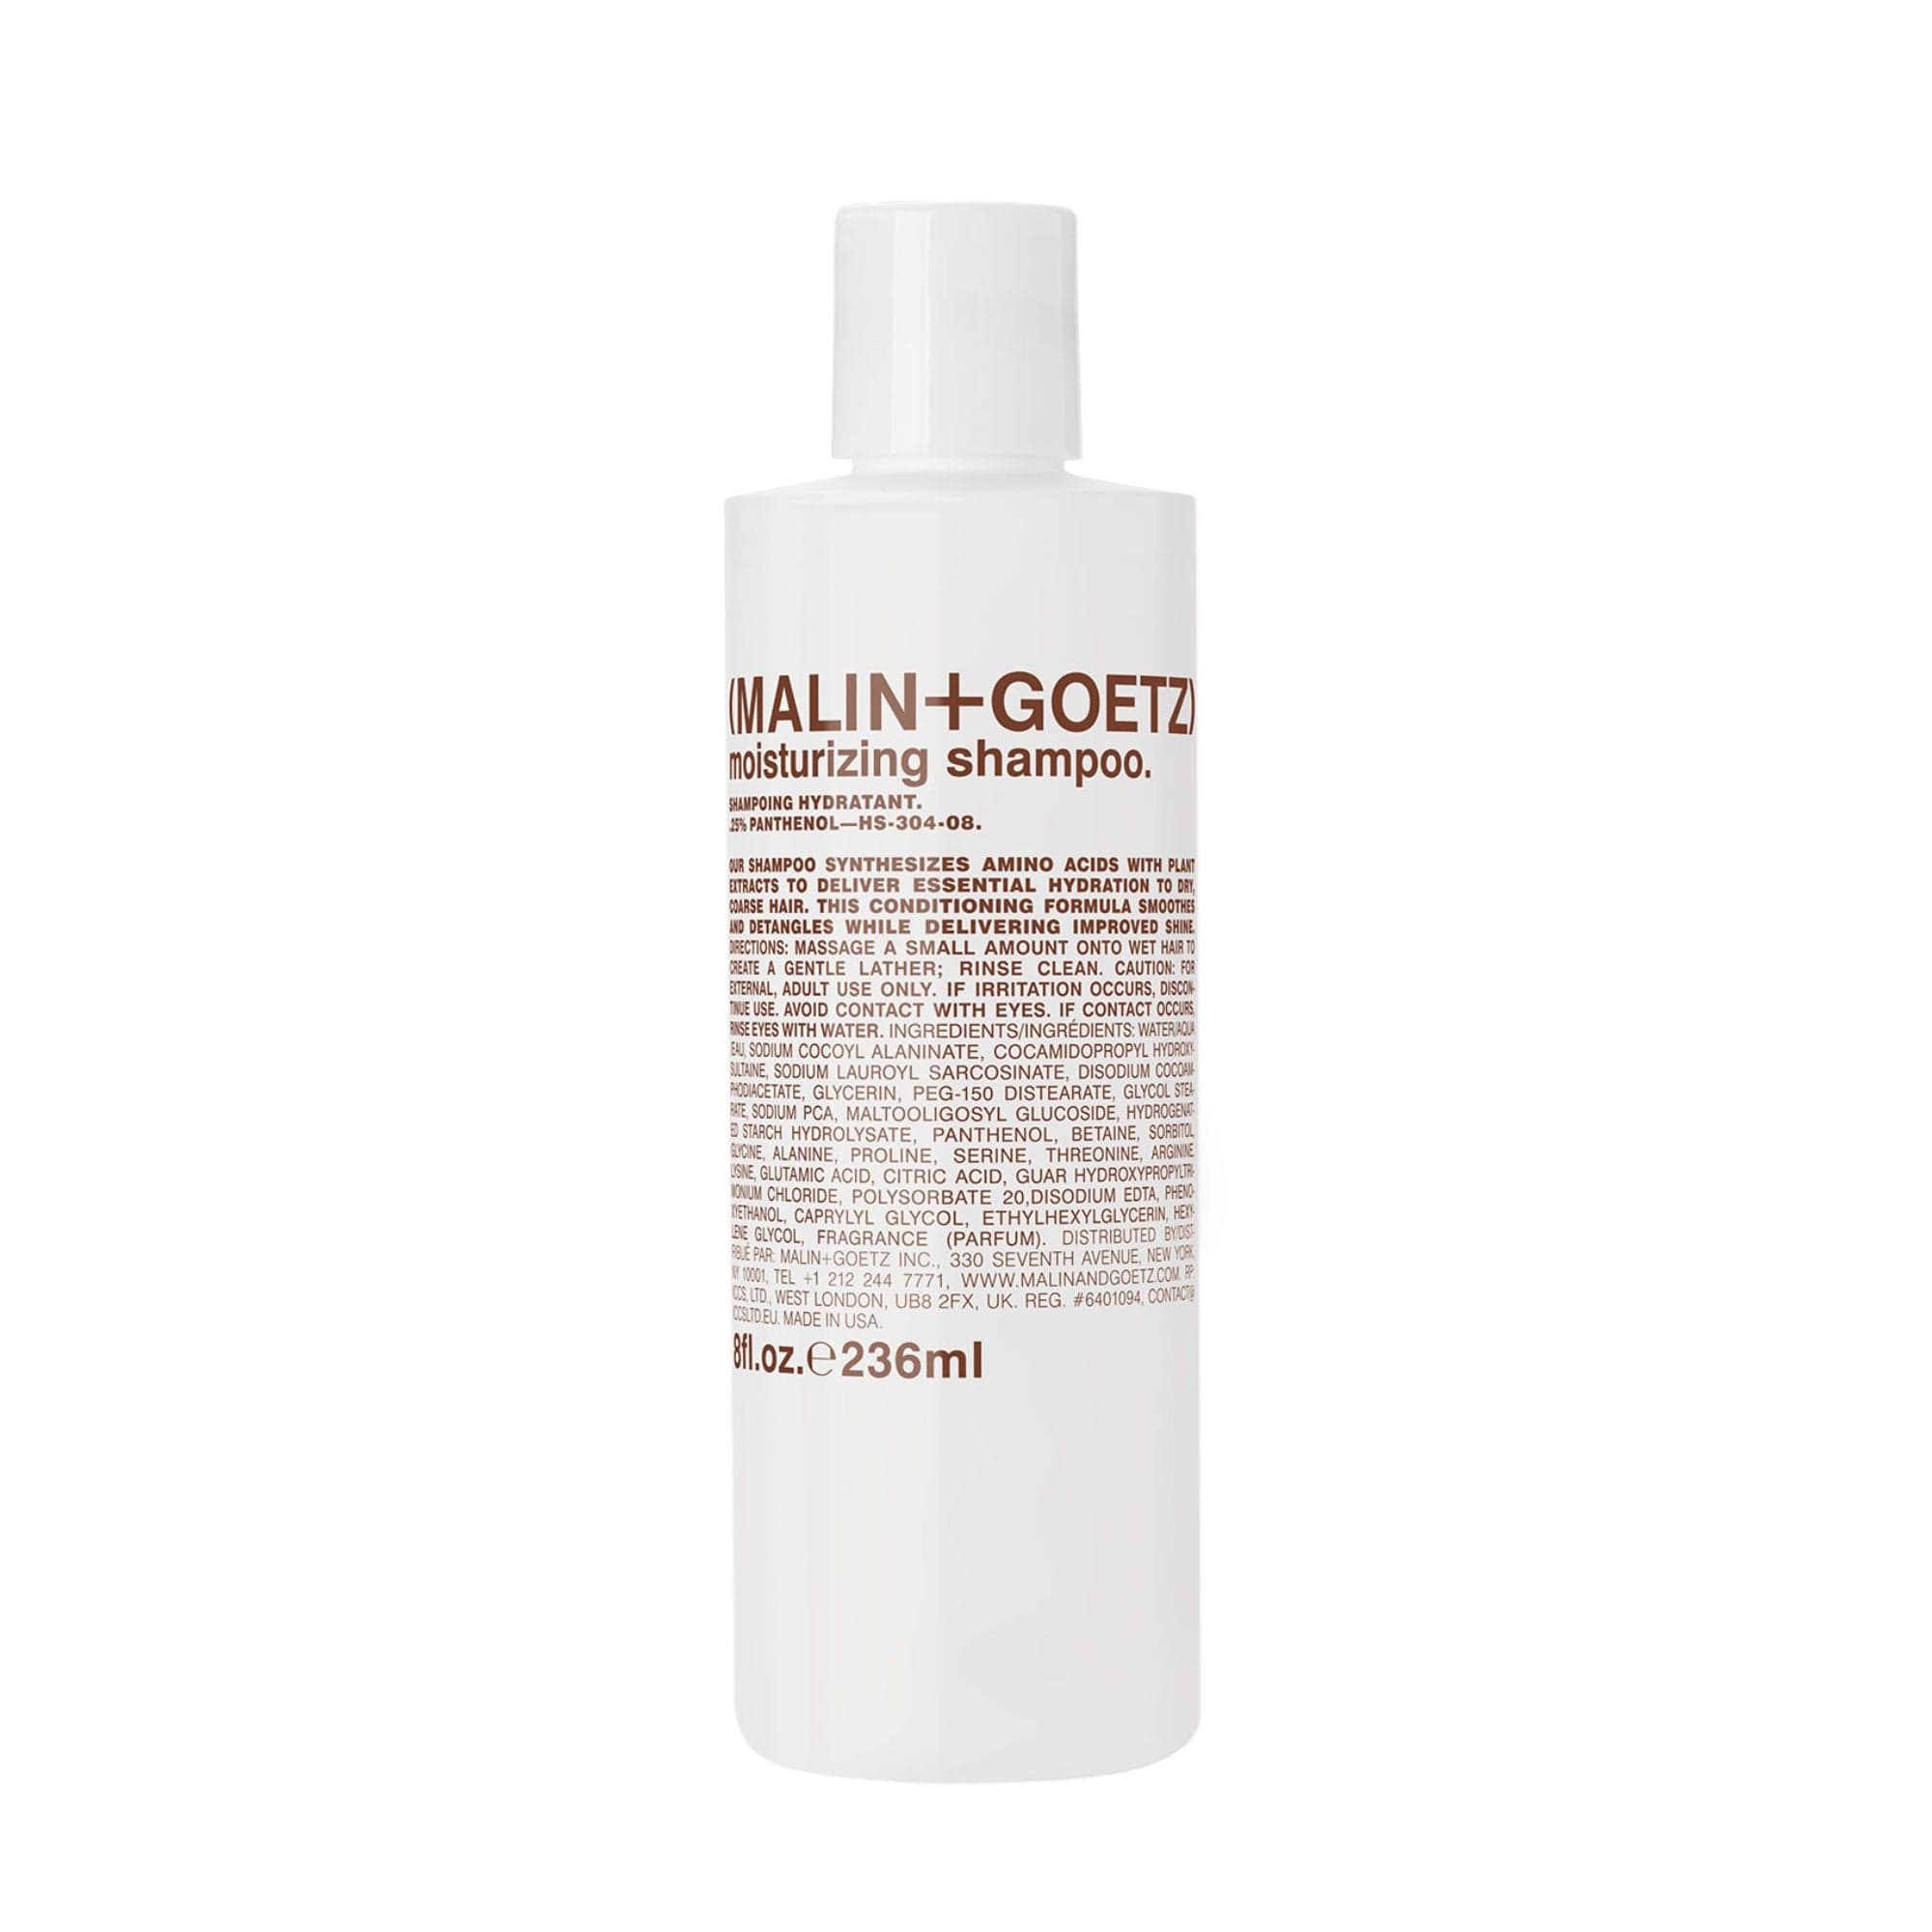 Moisturizing Shampoo (MALIN+GOETZ) - Champú hidratante